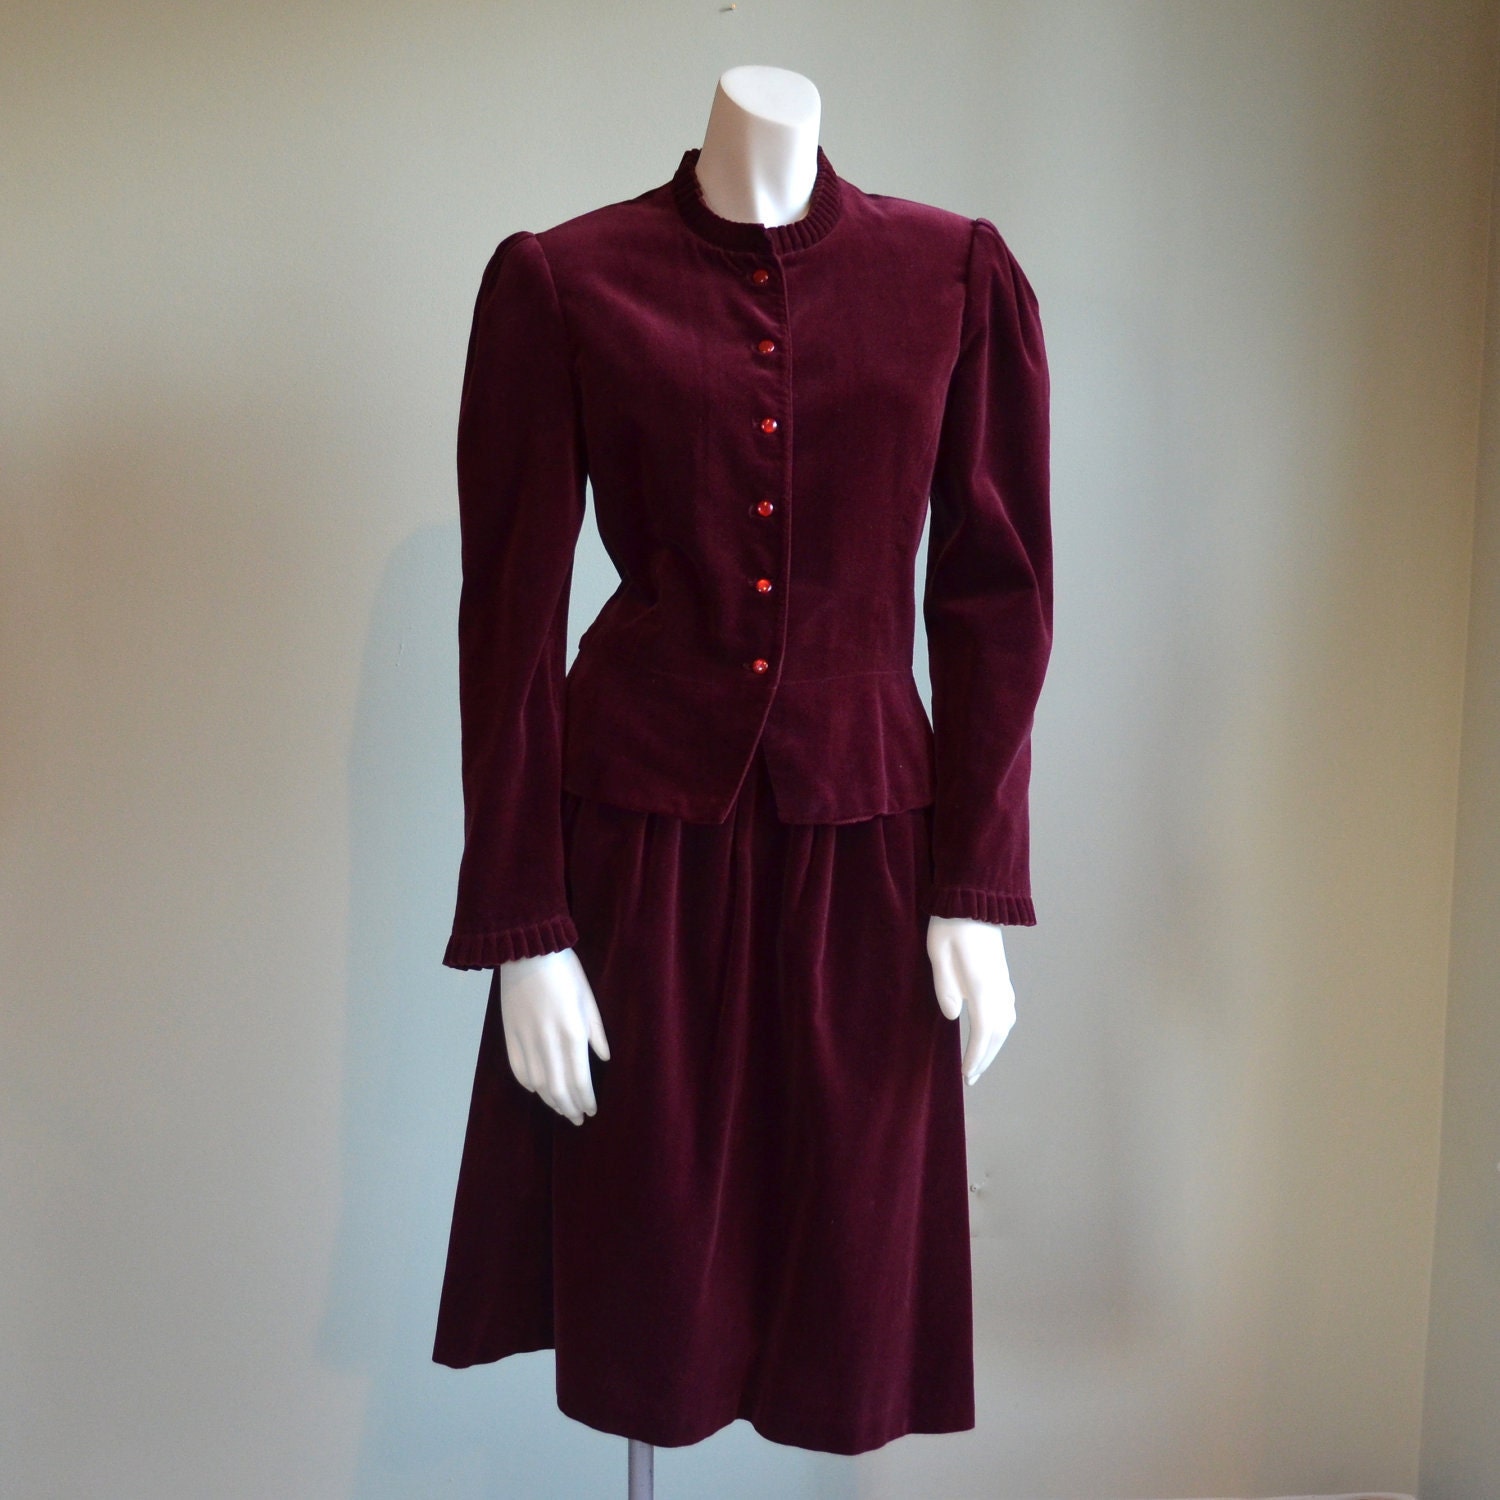 Burgundy Velvet Skirt Suit // Panther // 70s by GrapeJellyVintage